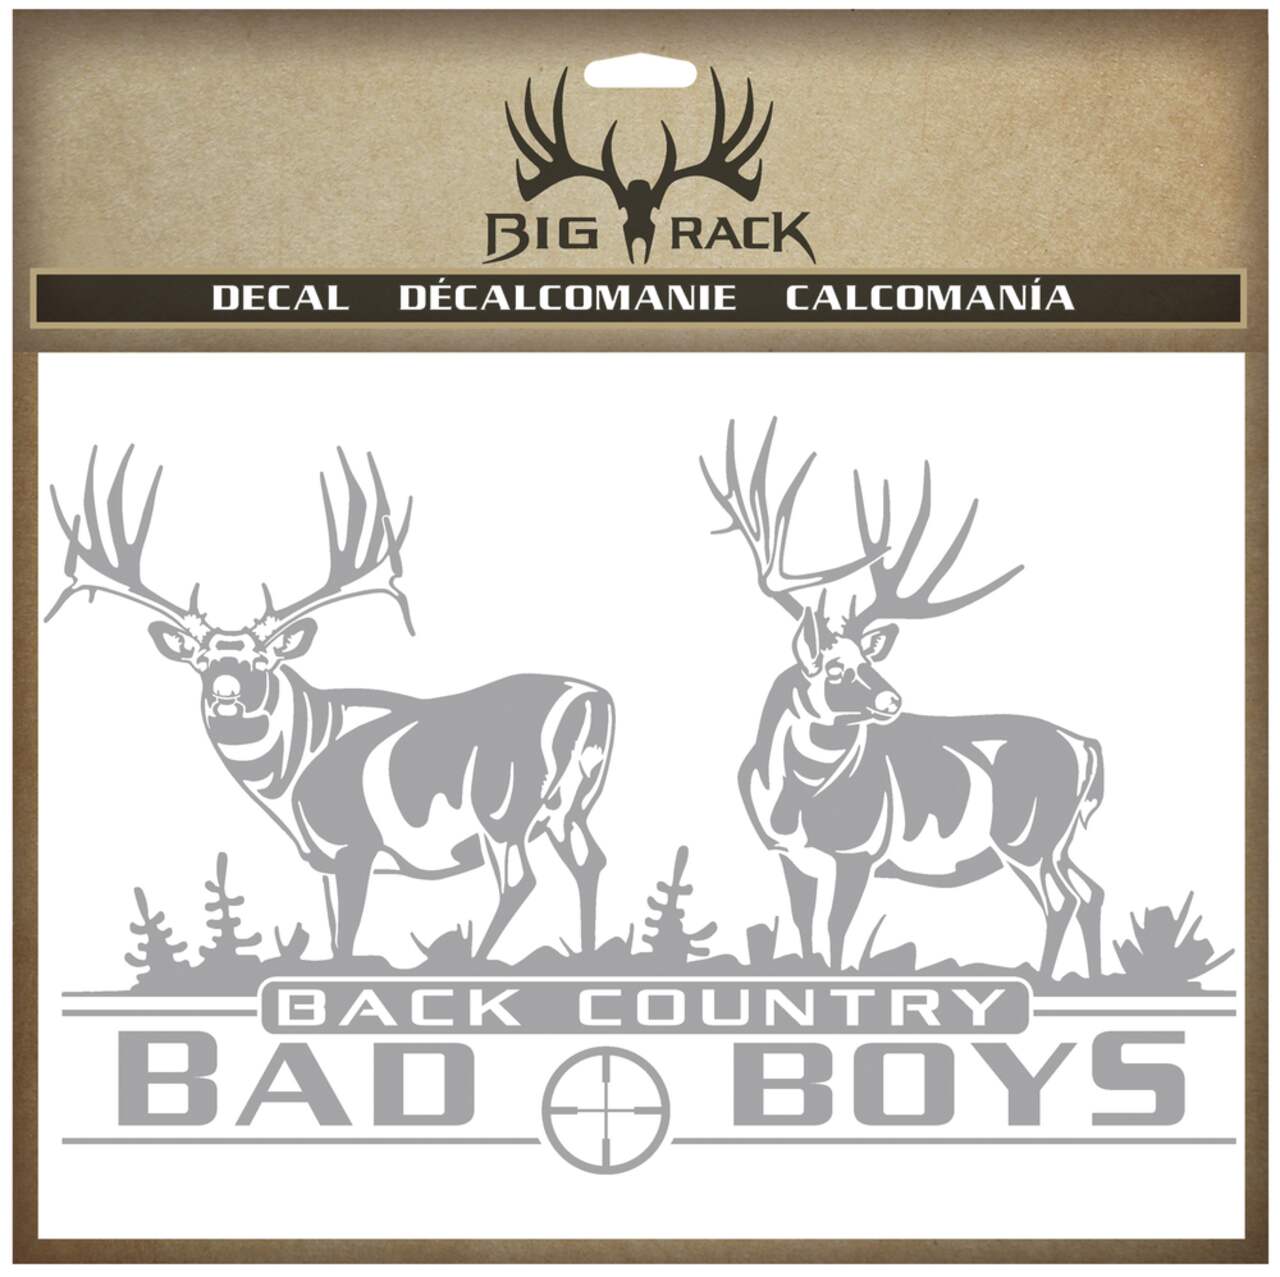 Big Rack Back Country Bad Boys Decal